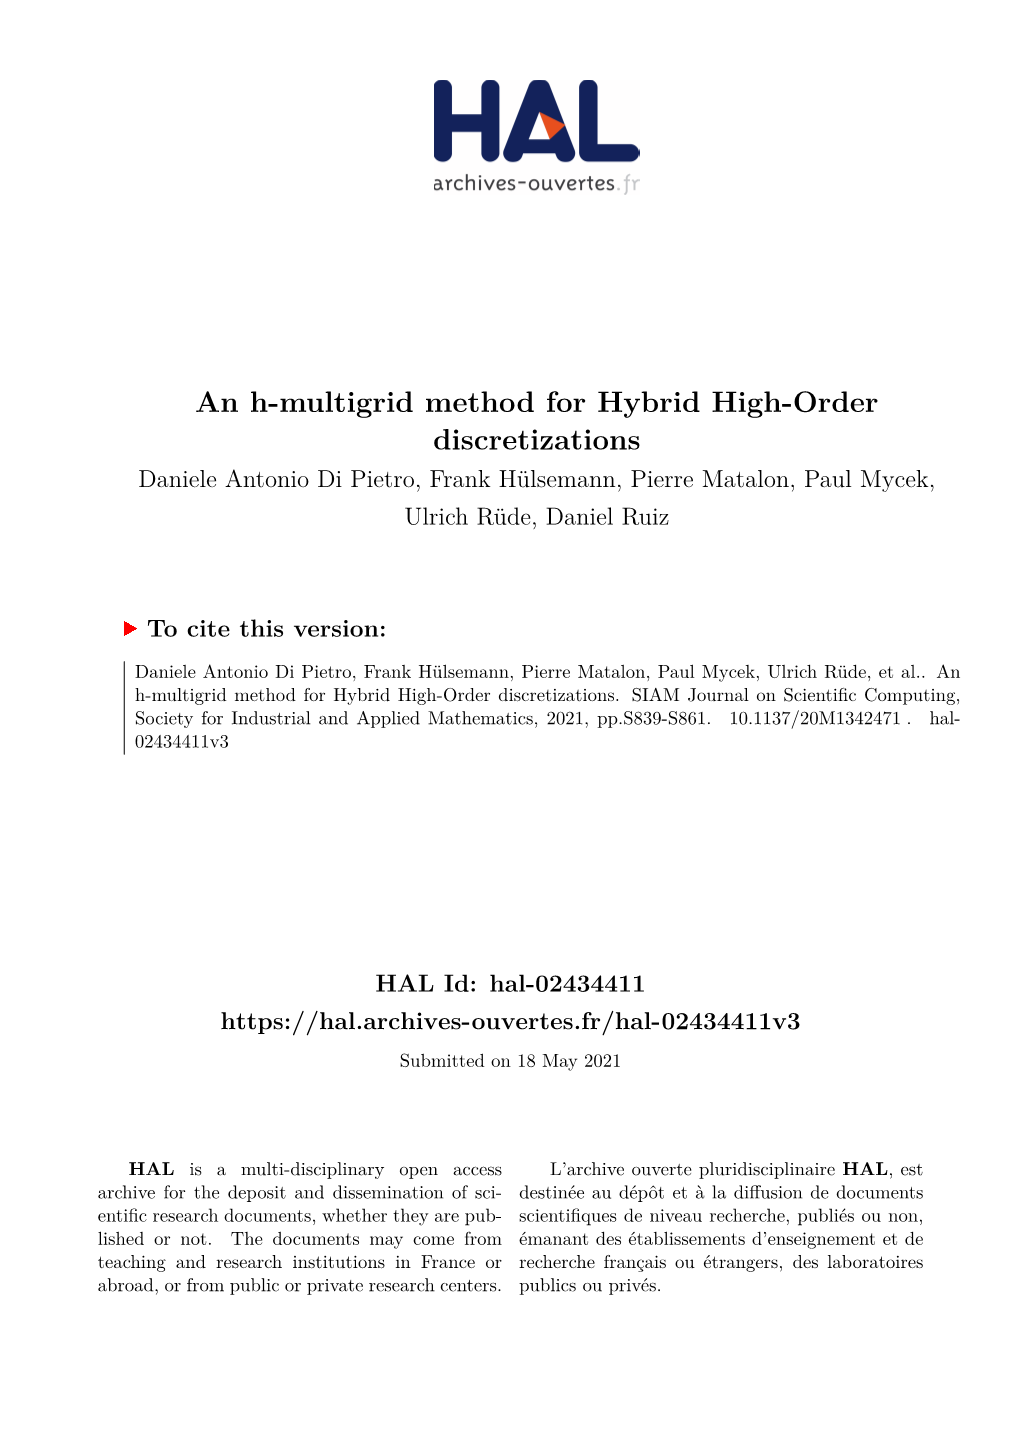 An H-Multigrid Method for Hybrid High-Order Discretizations Daniele Antonio Di Pietro, Frank Hülsemann, Pierre Matalon, Paul Mycek, Ulrich Rüde, Daniel Ruiz